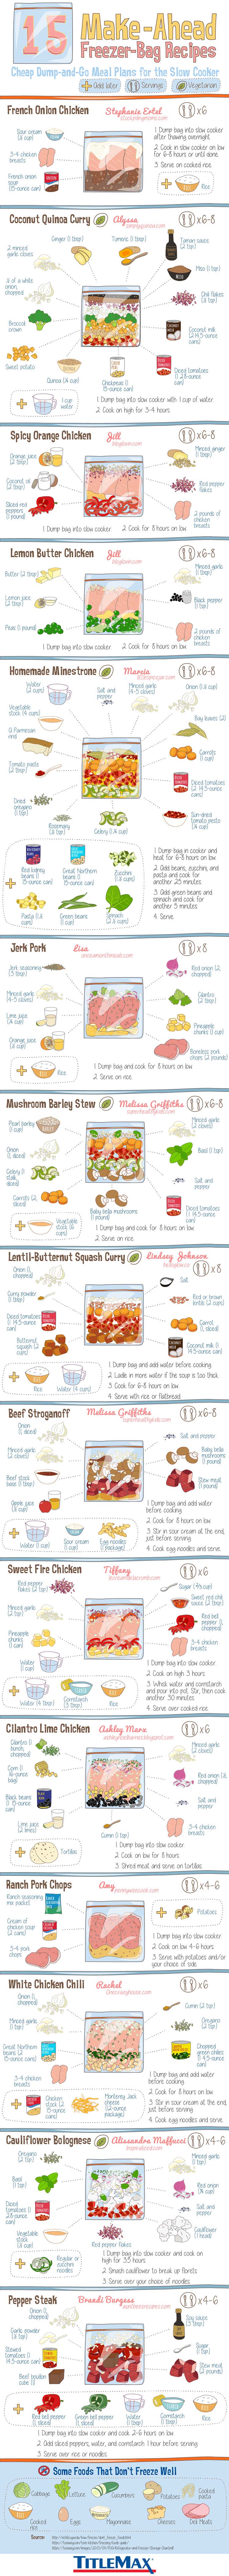 15 Make-Ahead Freezer-Bag Meals